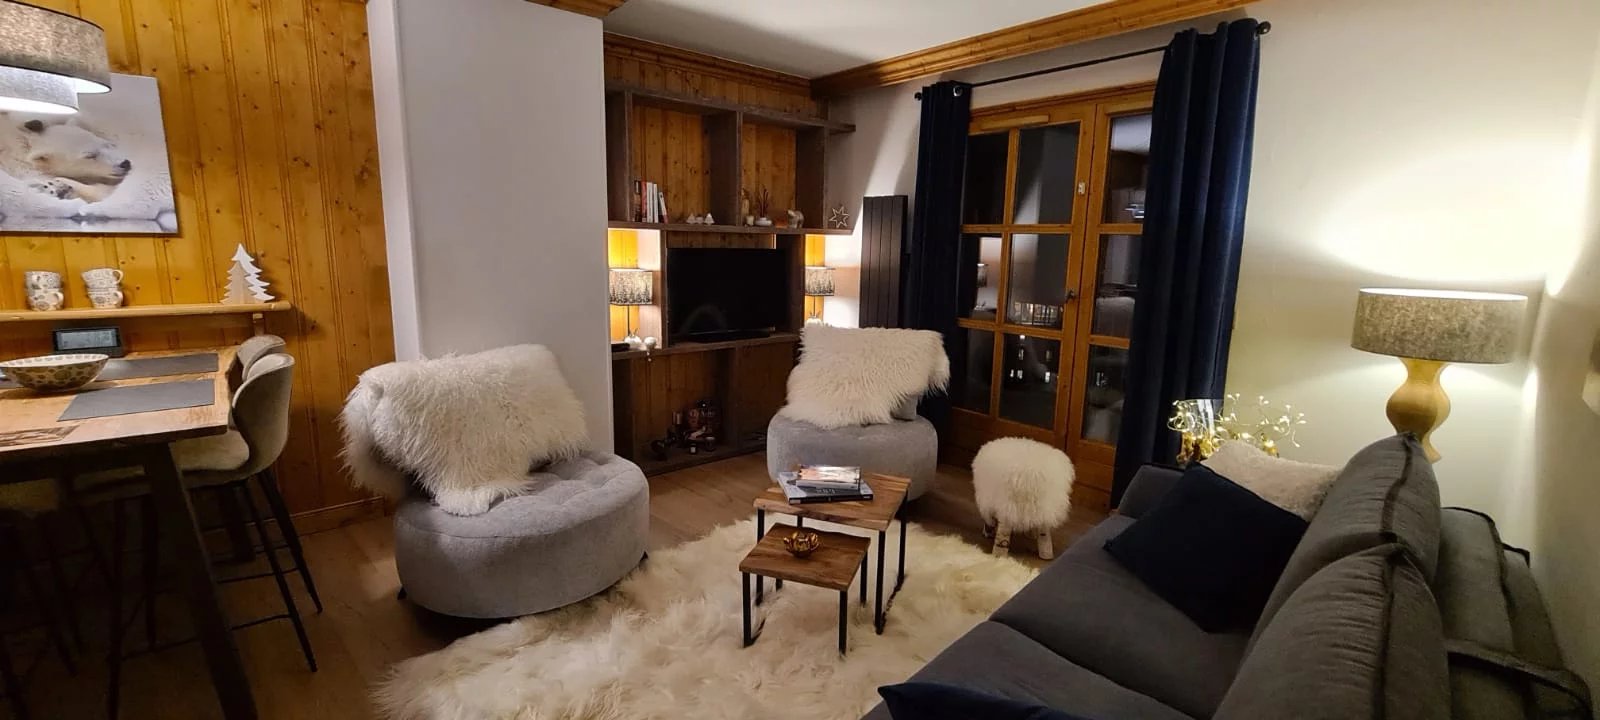 1 bedroom apartment, Secondhome Interiors transformation